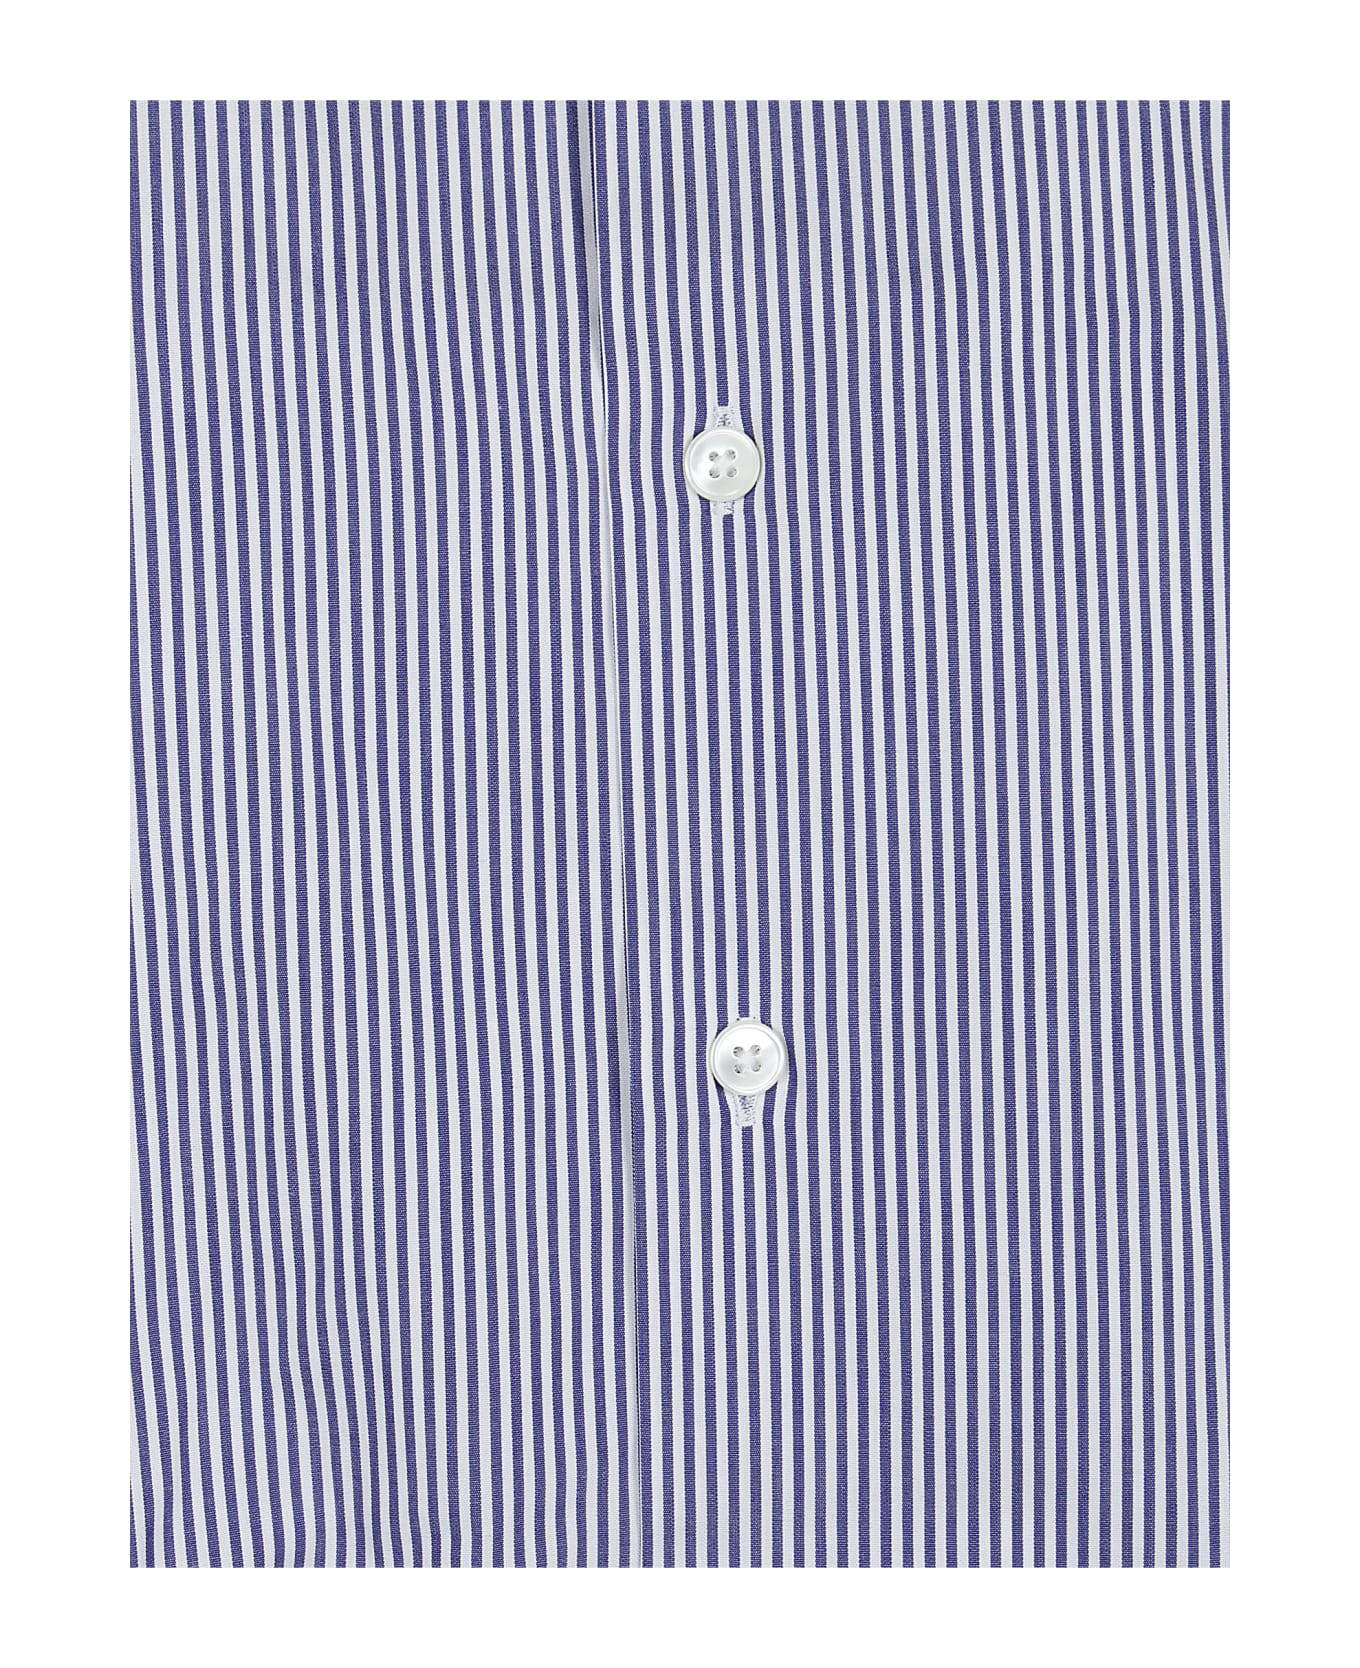 Bagutta Long Sleeve Shirt - Bianco/blu シャツ